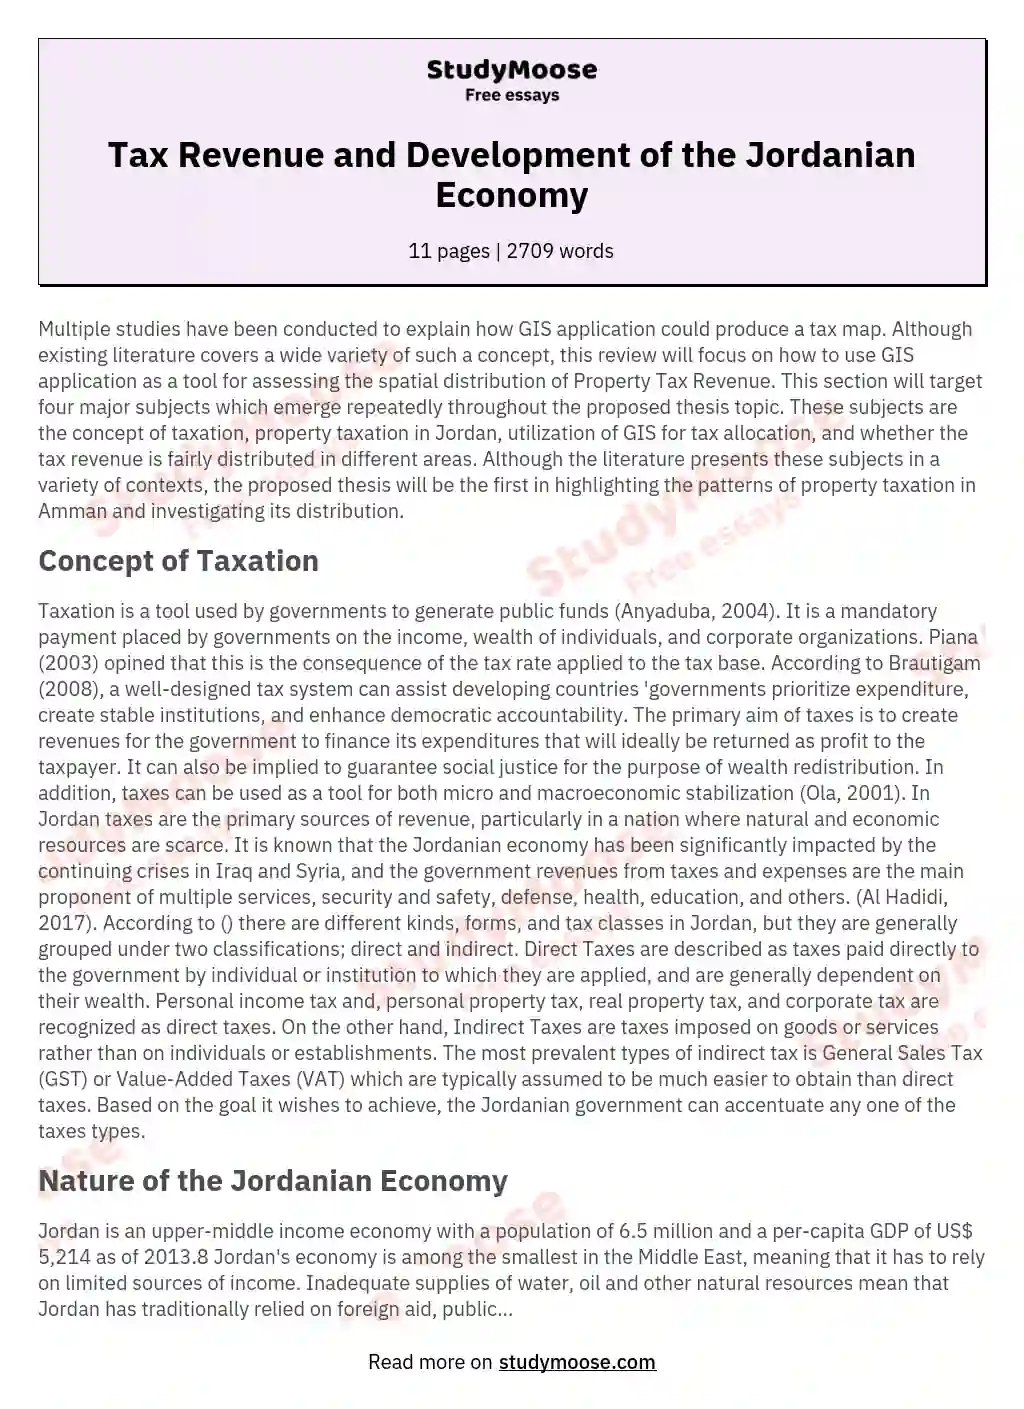 Tax Revenue and Development of the Jordanian Economy essay